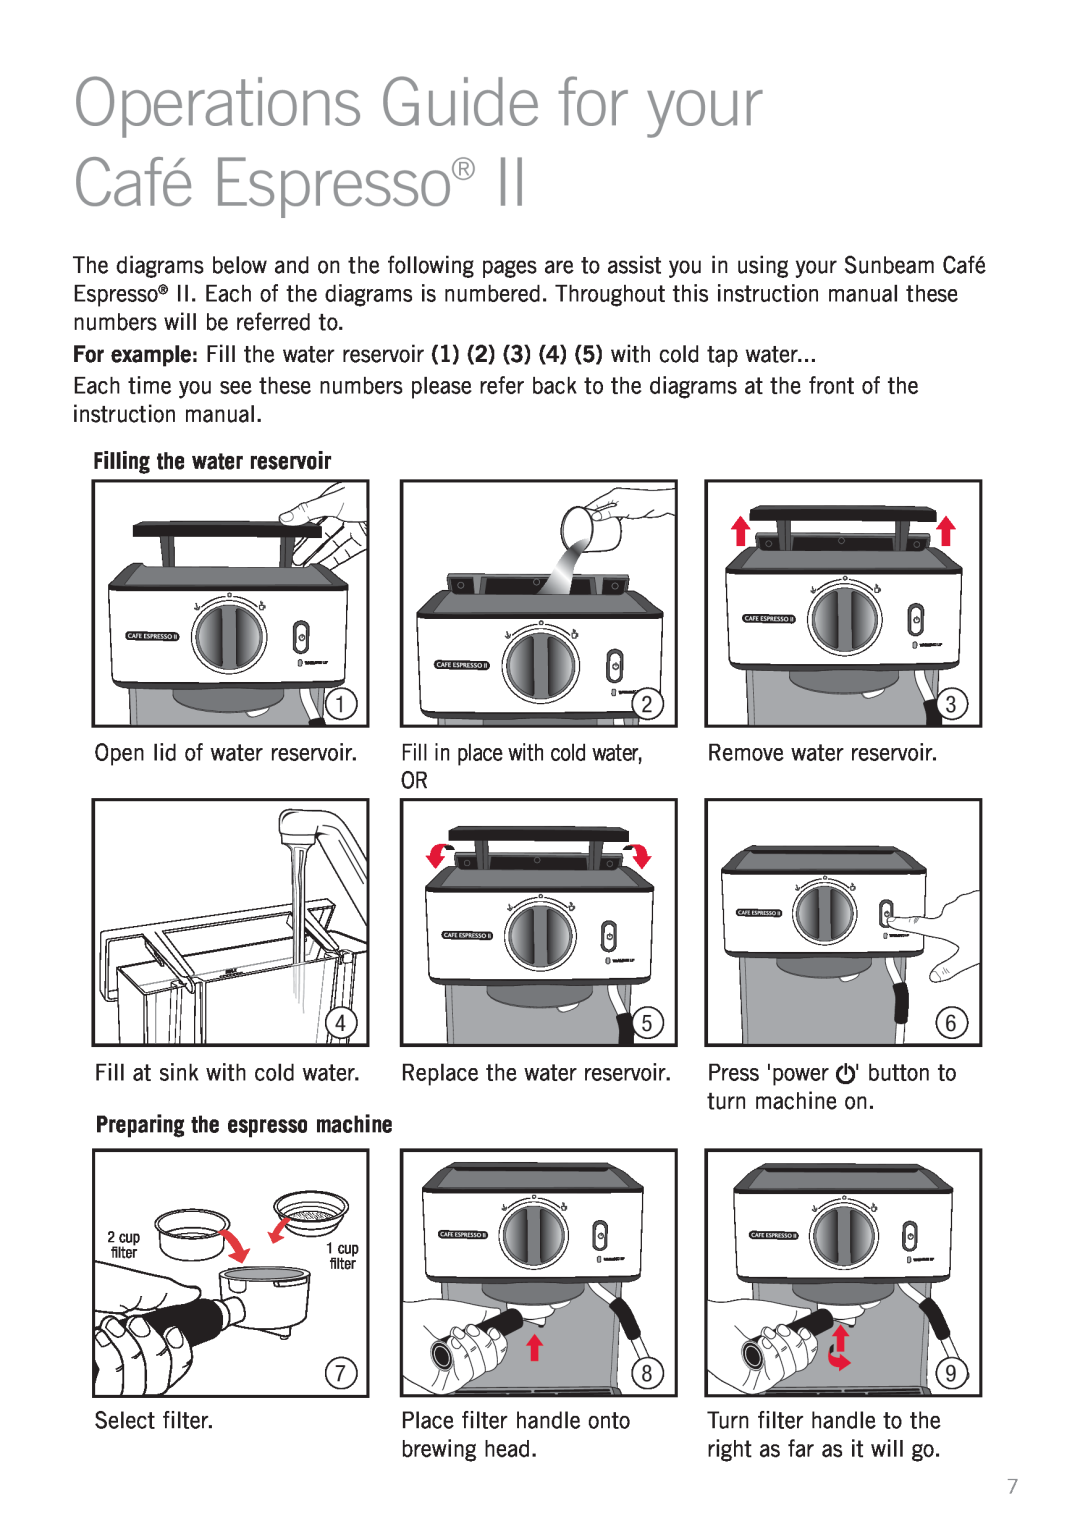 Sunbeam EM3820 manual Operations Guide for your Café Espresso, Filling the water reservoir, Preparing the espresso machine 